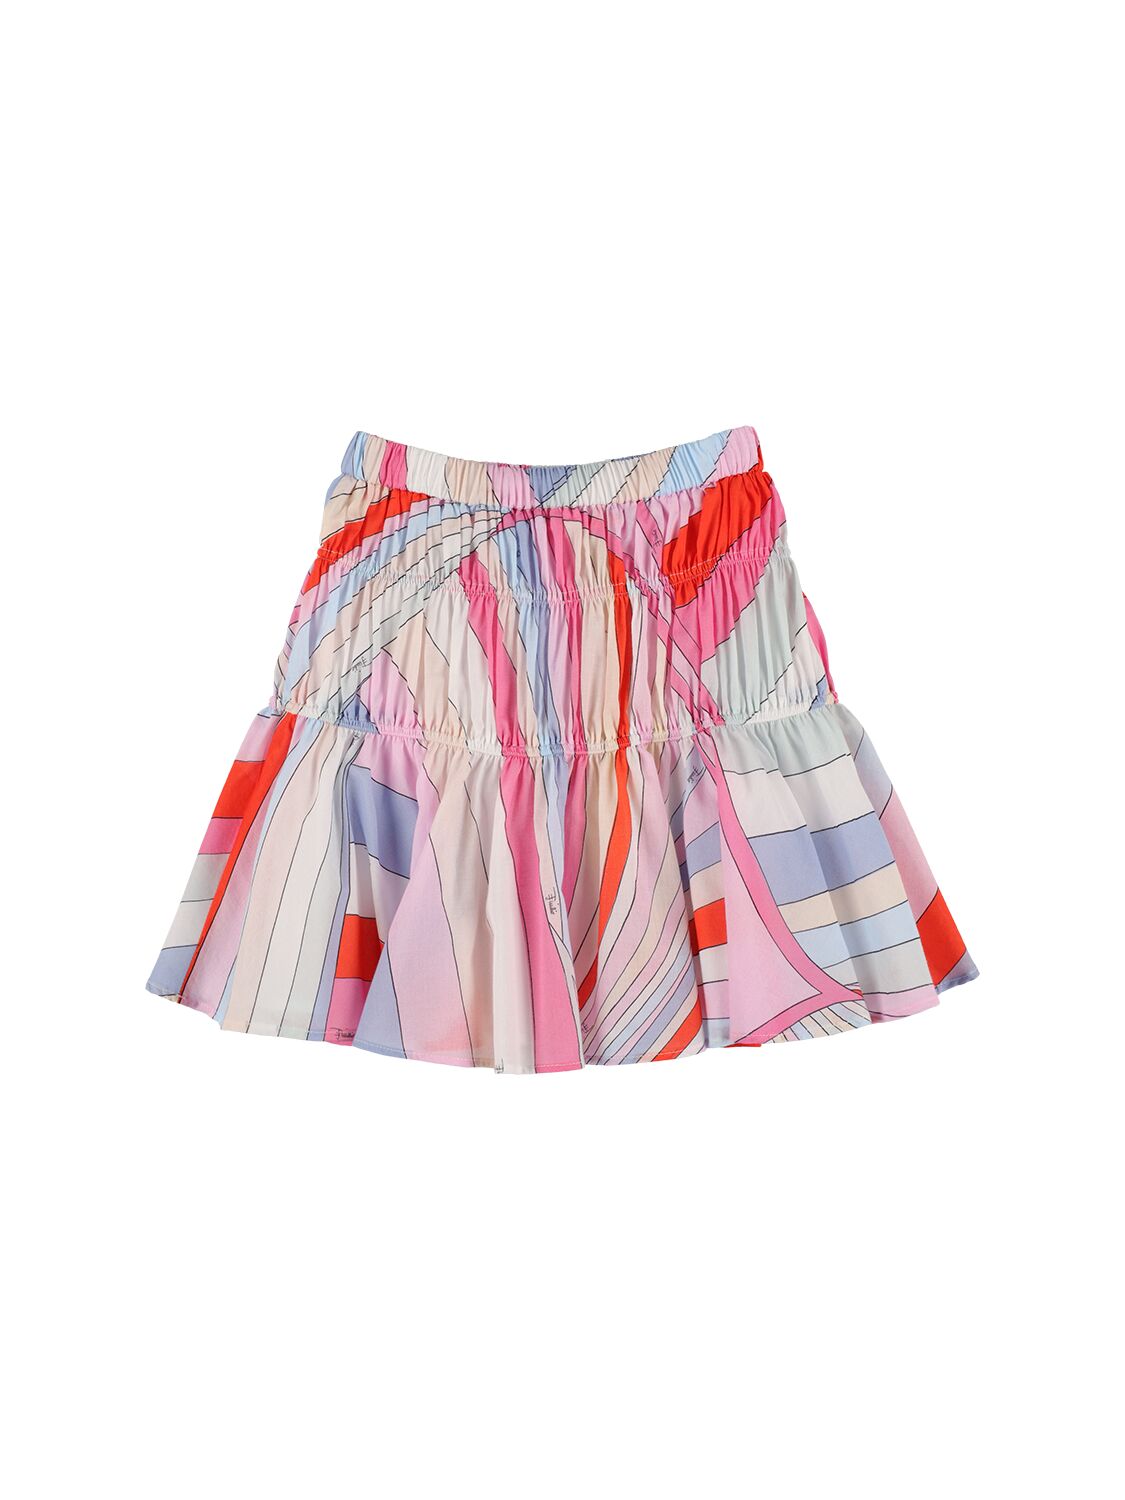 Image of Printed Cotton Muslin Mini Skirt